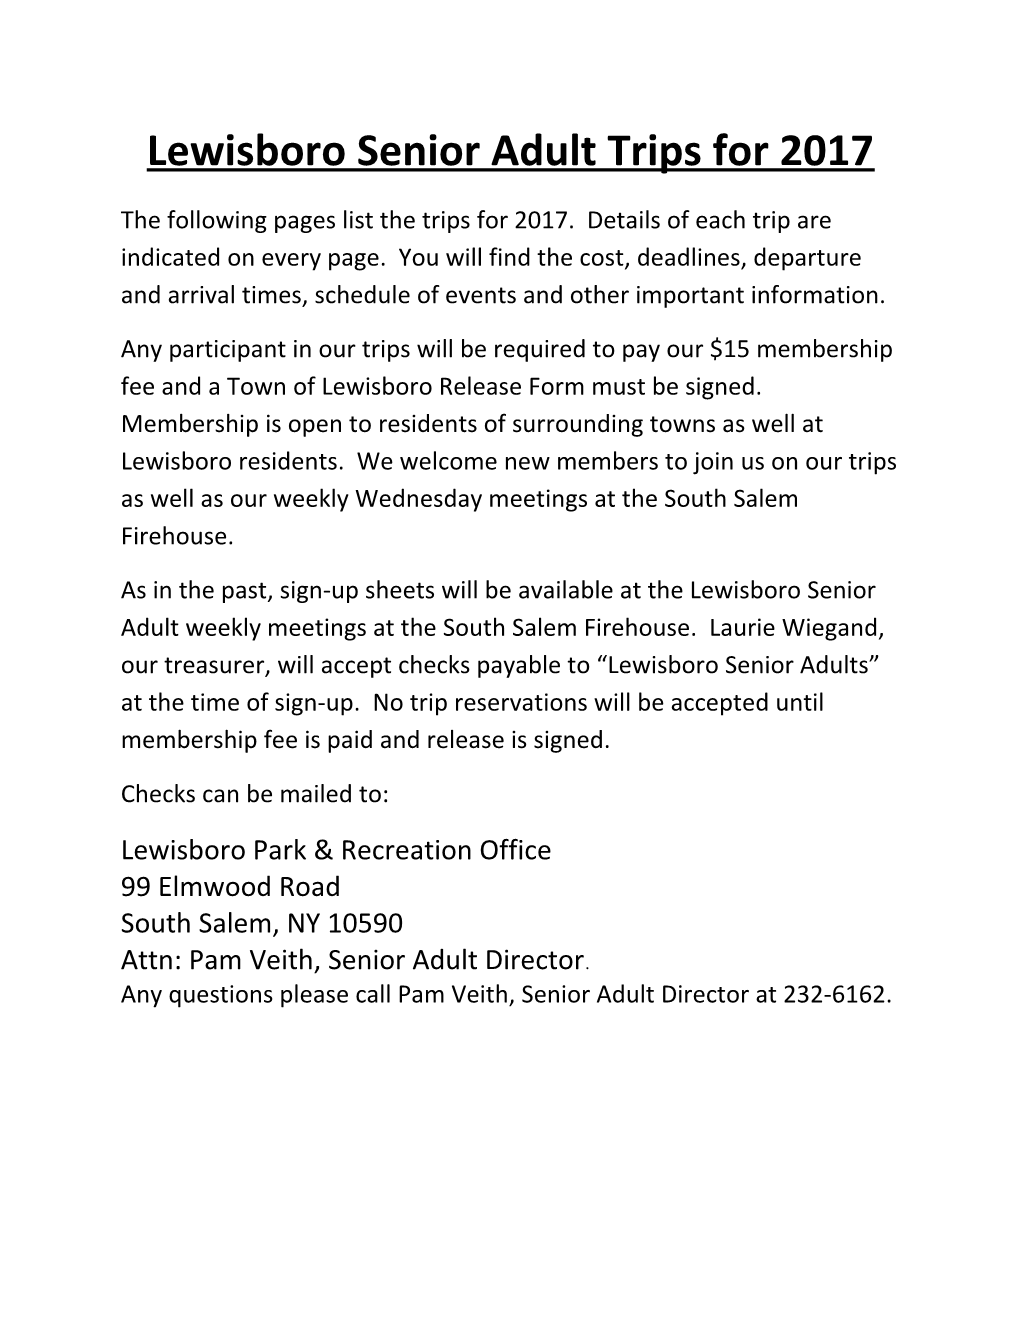 Lewisboro Senior Adult Trips for 2015